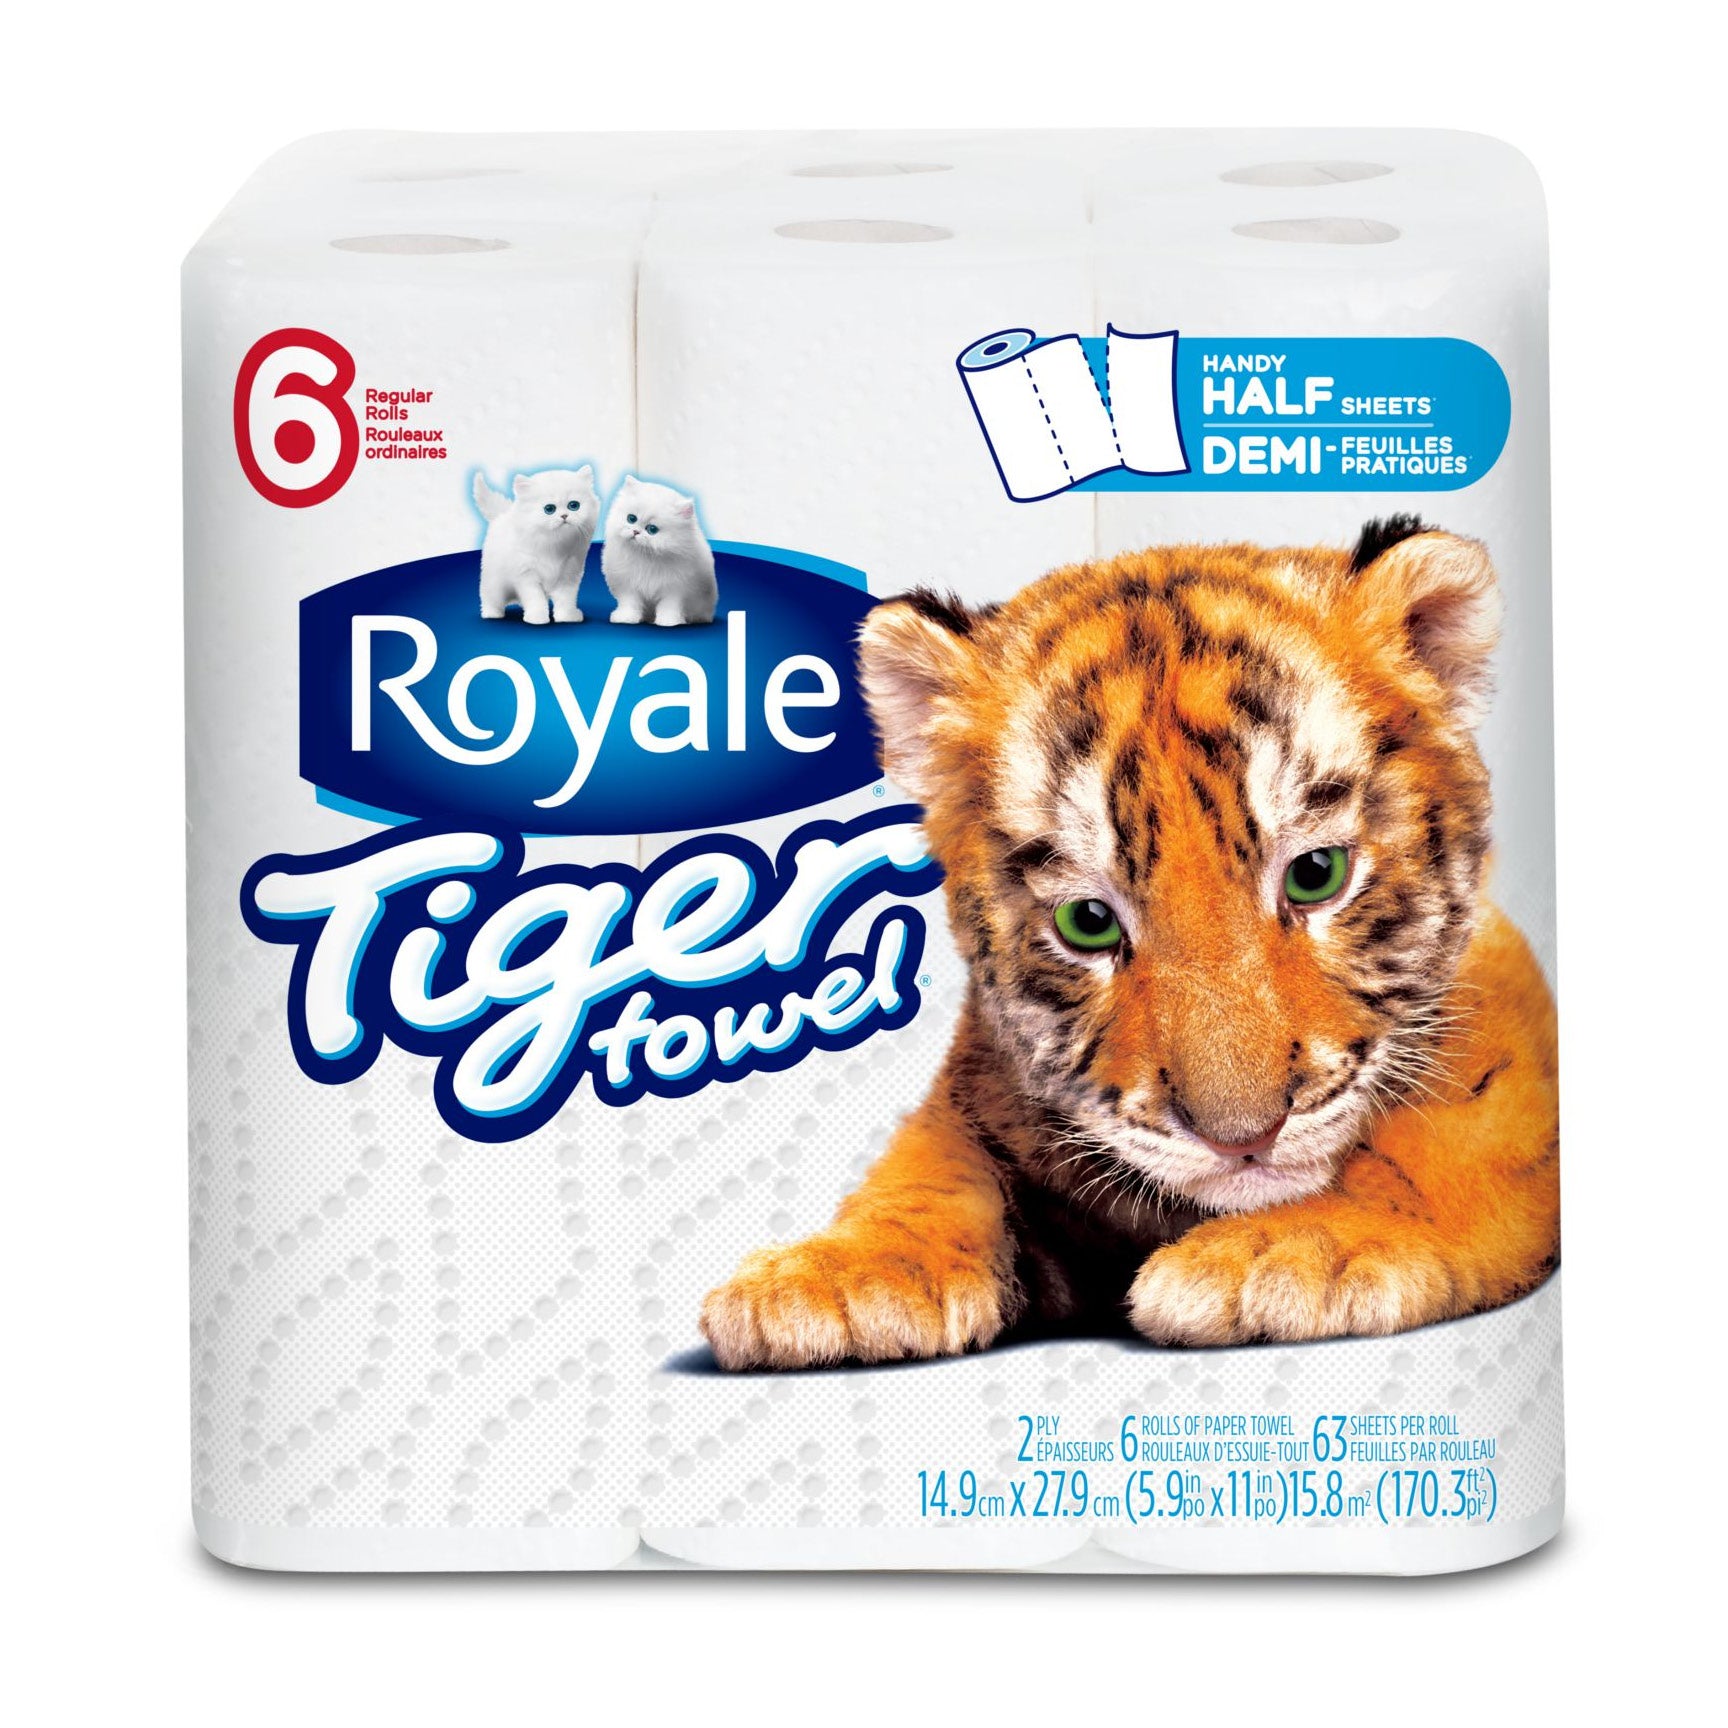 Royale Tiger Strong Paper Towel, 2-Ply, Handy Half-Sheets, 3pk